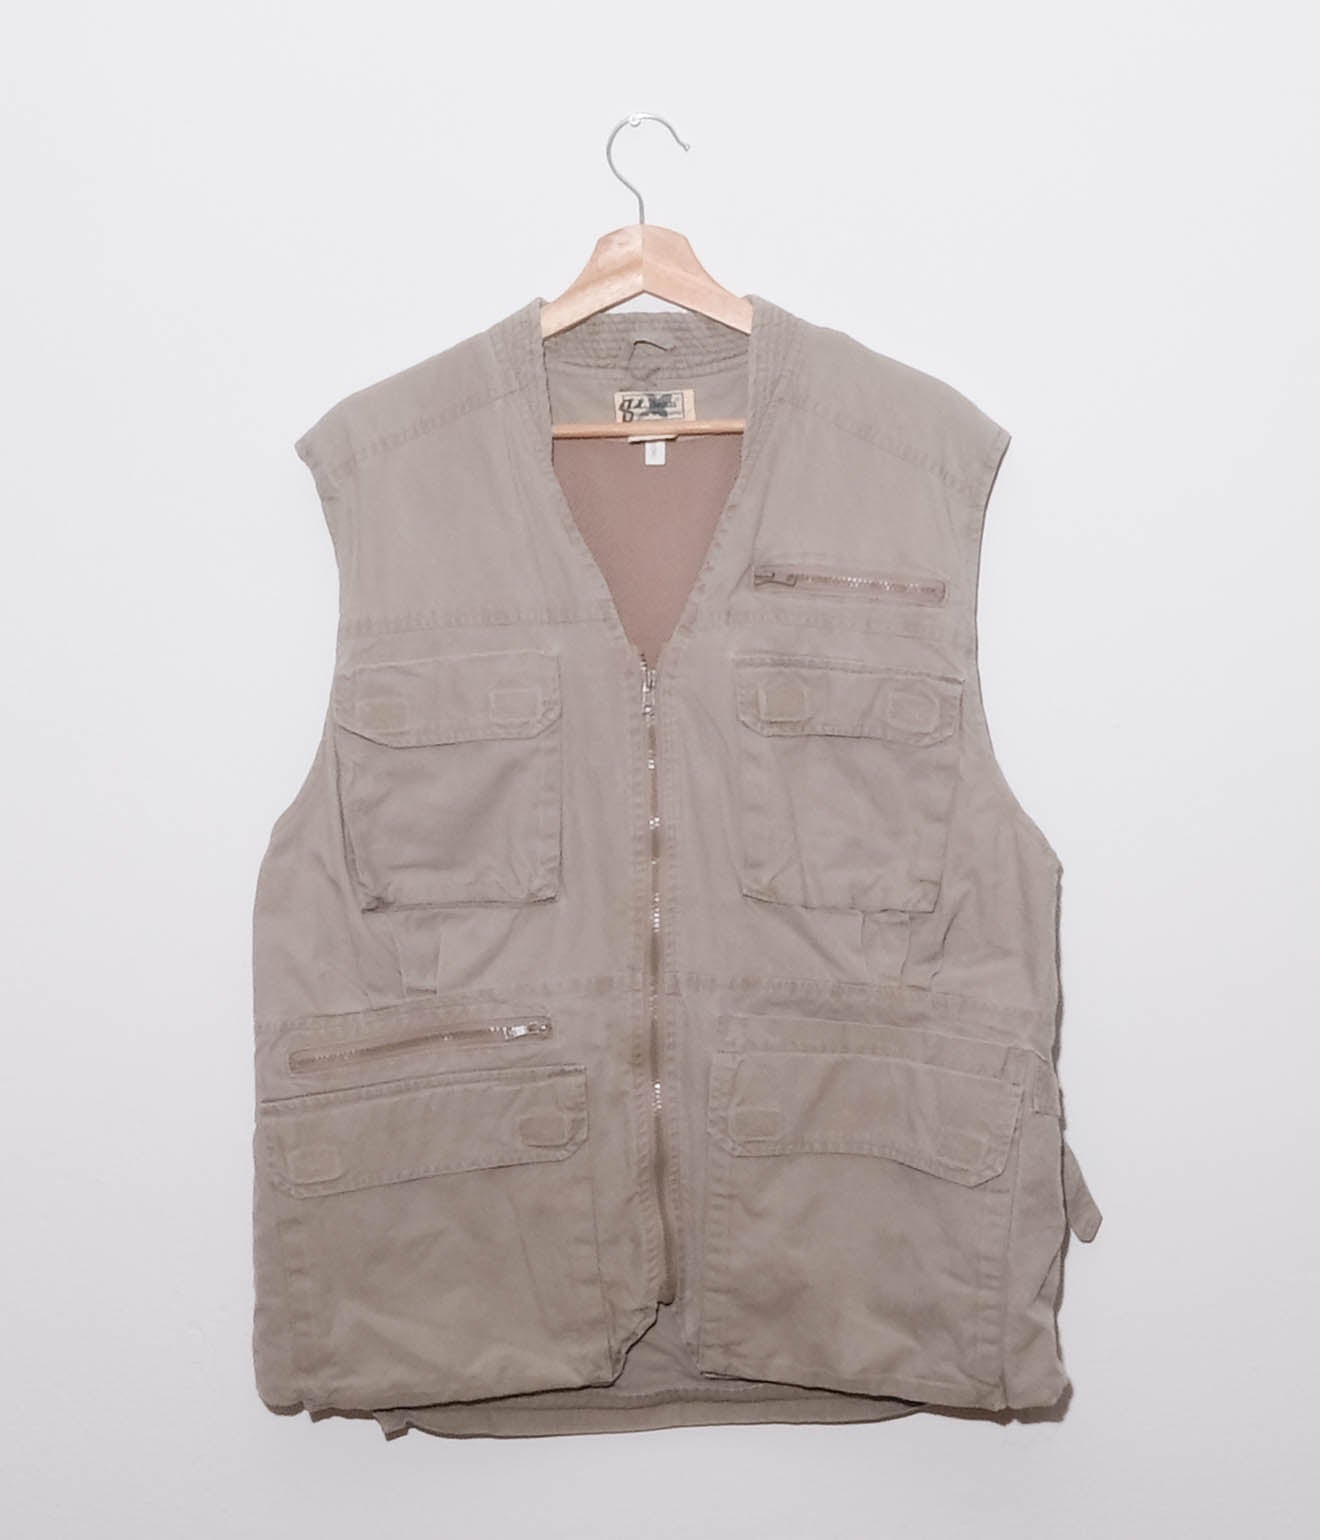 80's L.L.Bean Tropic Weights Fishing Vest (Beige)